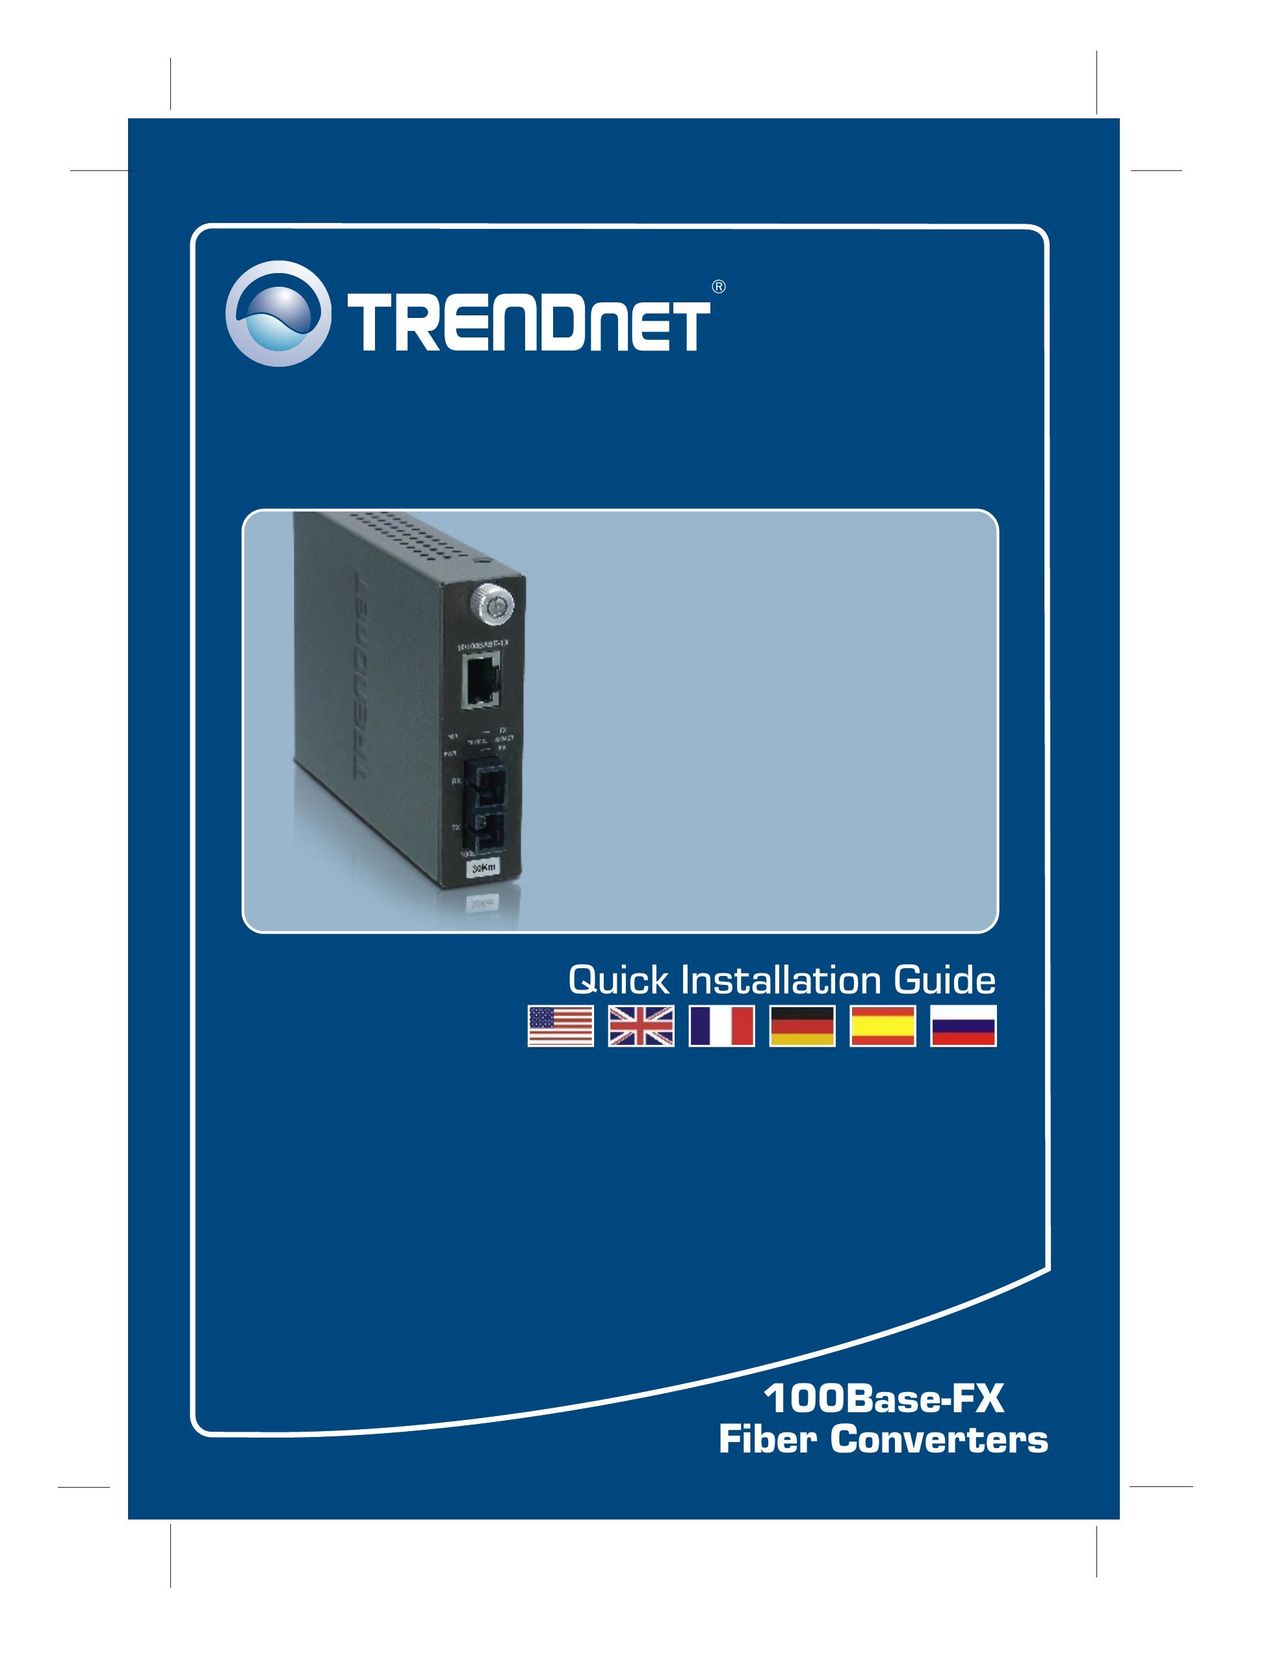 TRENDnet 100BASE-FX Network Router User Manual